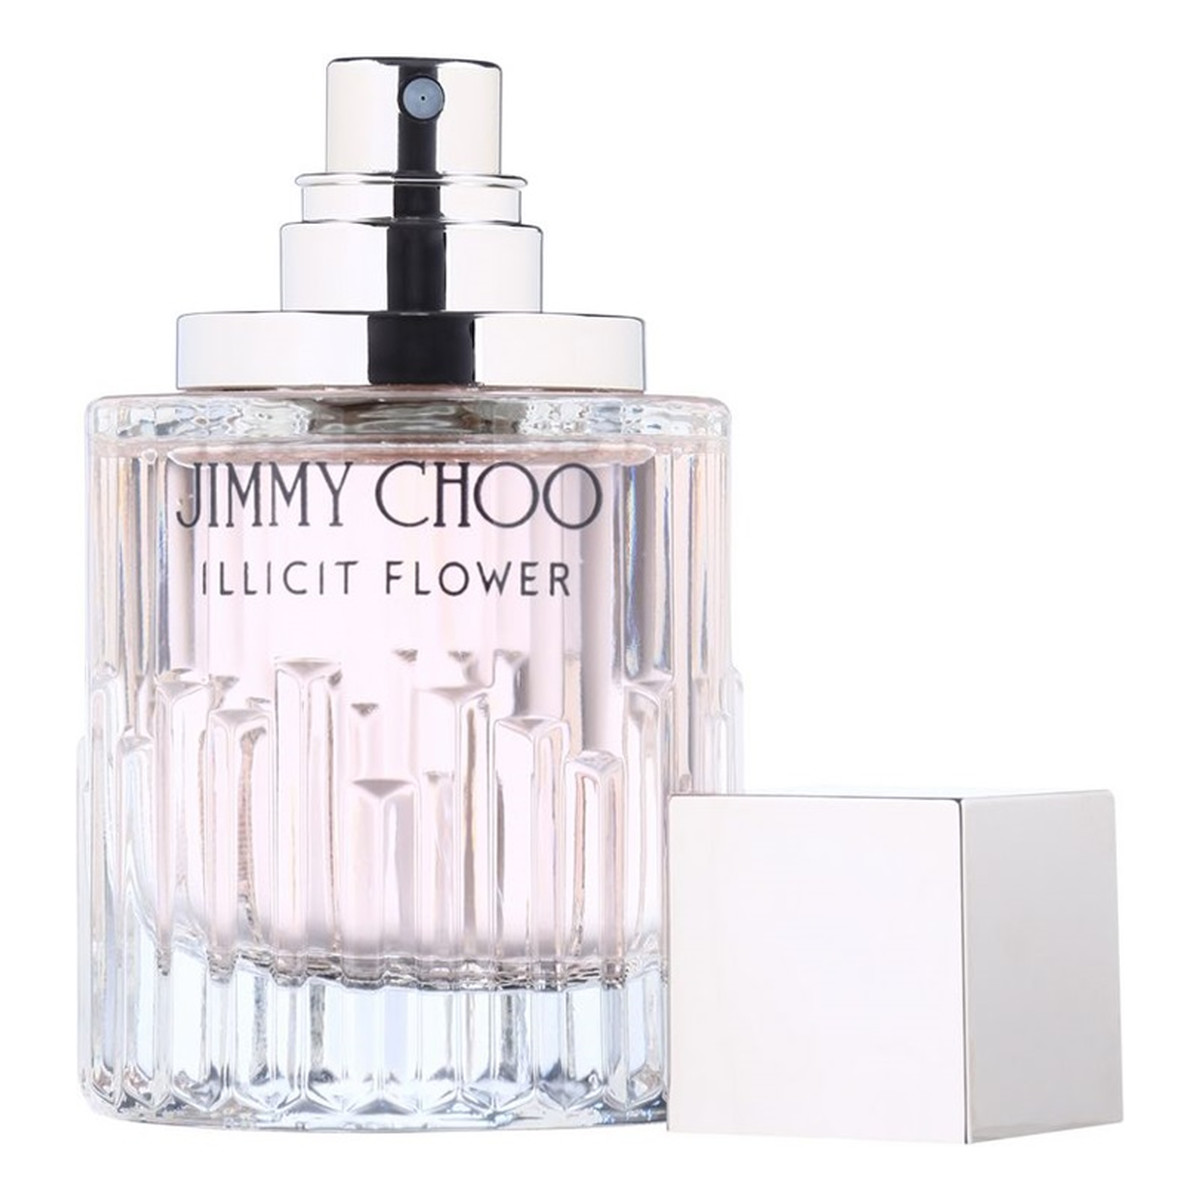 Jimmy Choo Illicit Flower woda perfumowana 40ml